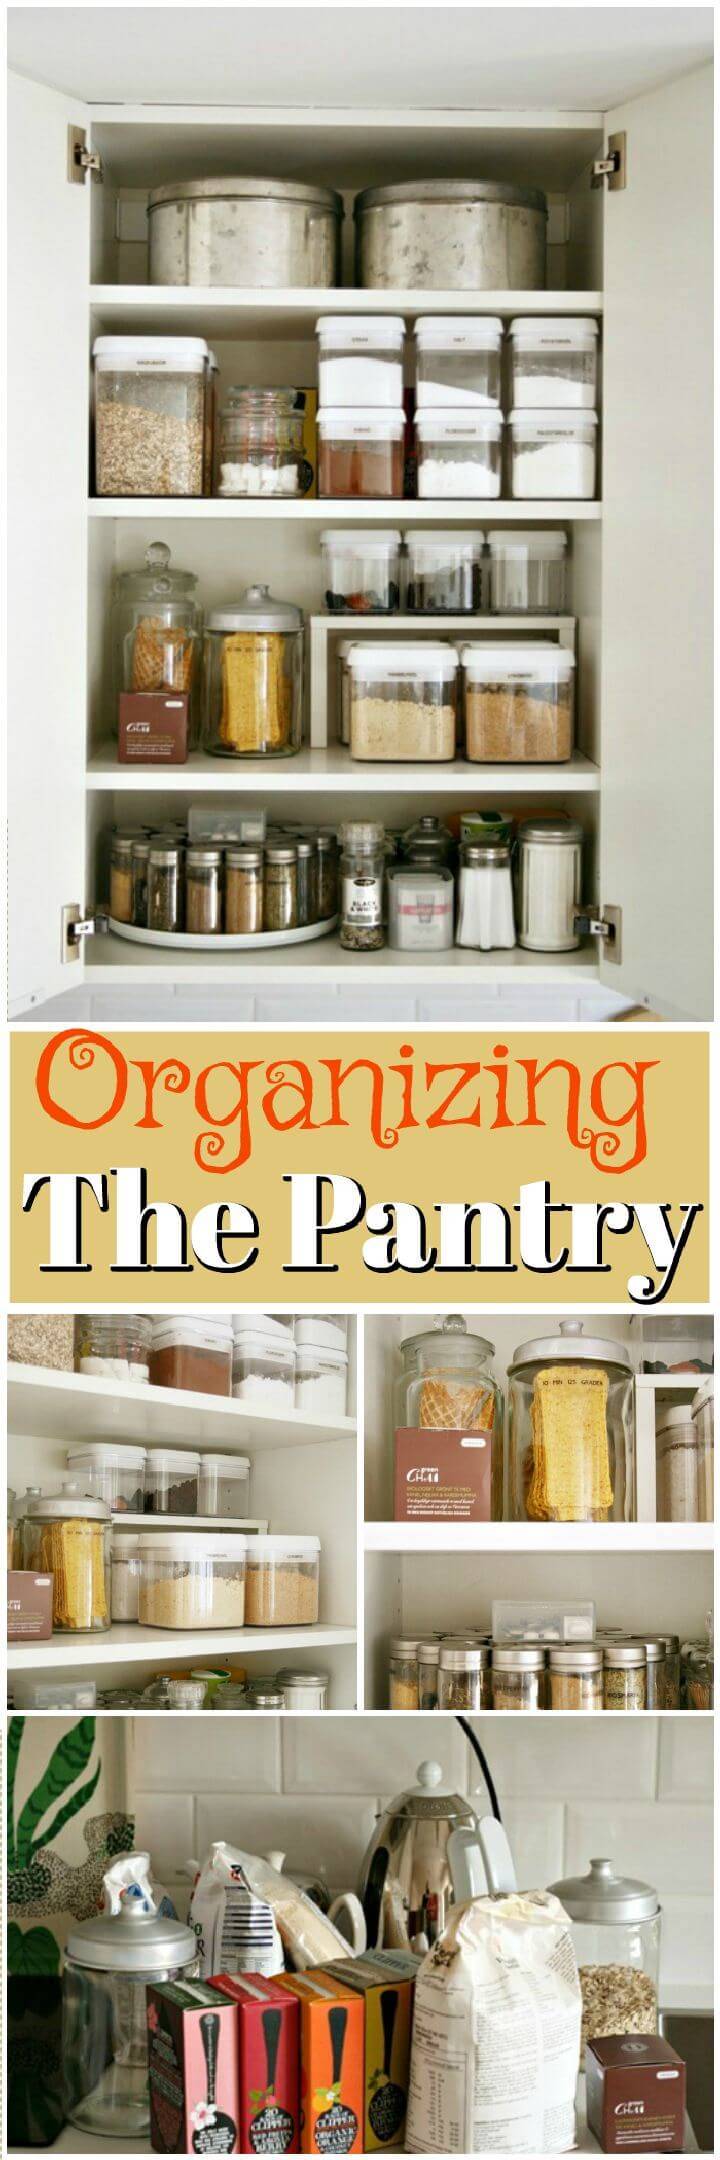 Organizing the Pantry